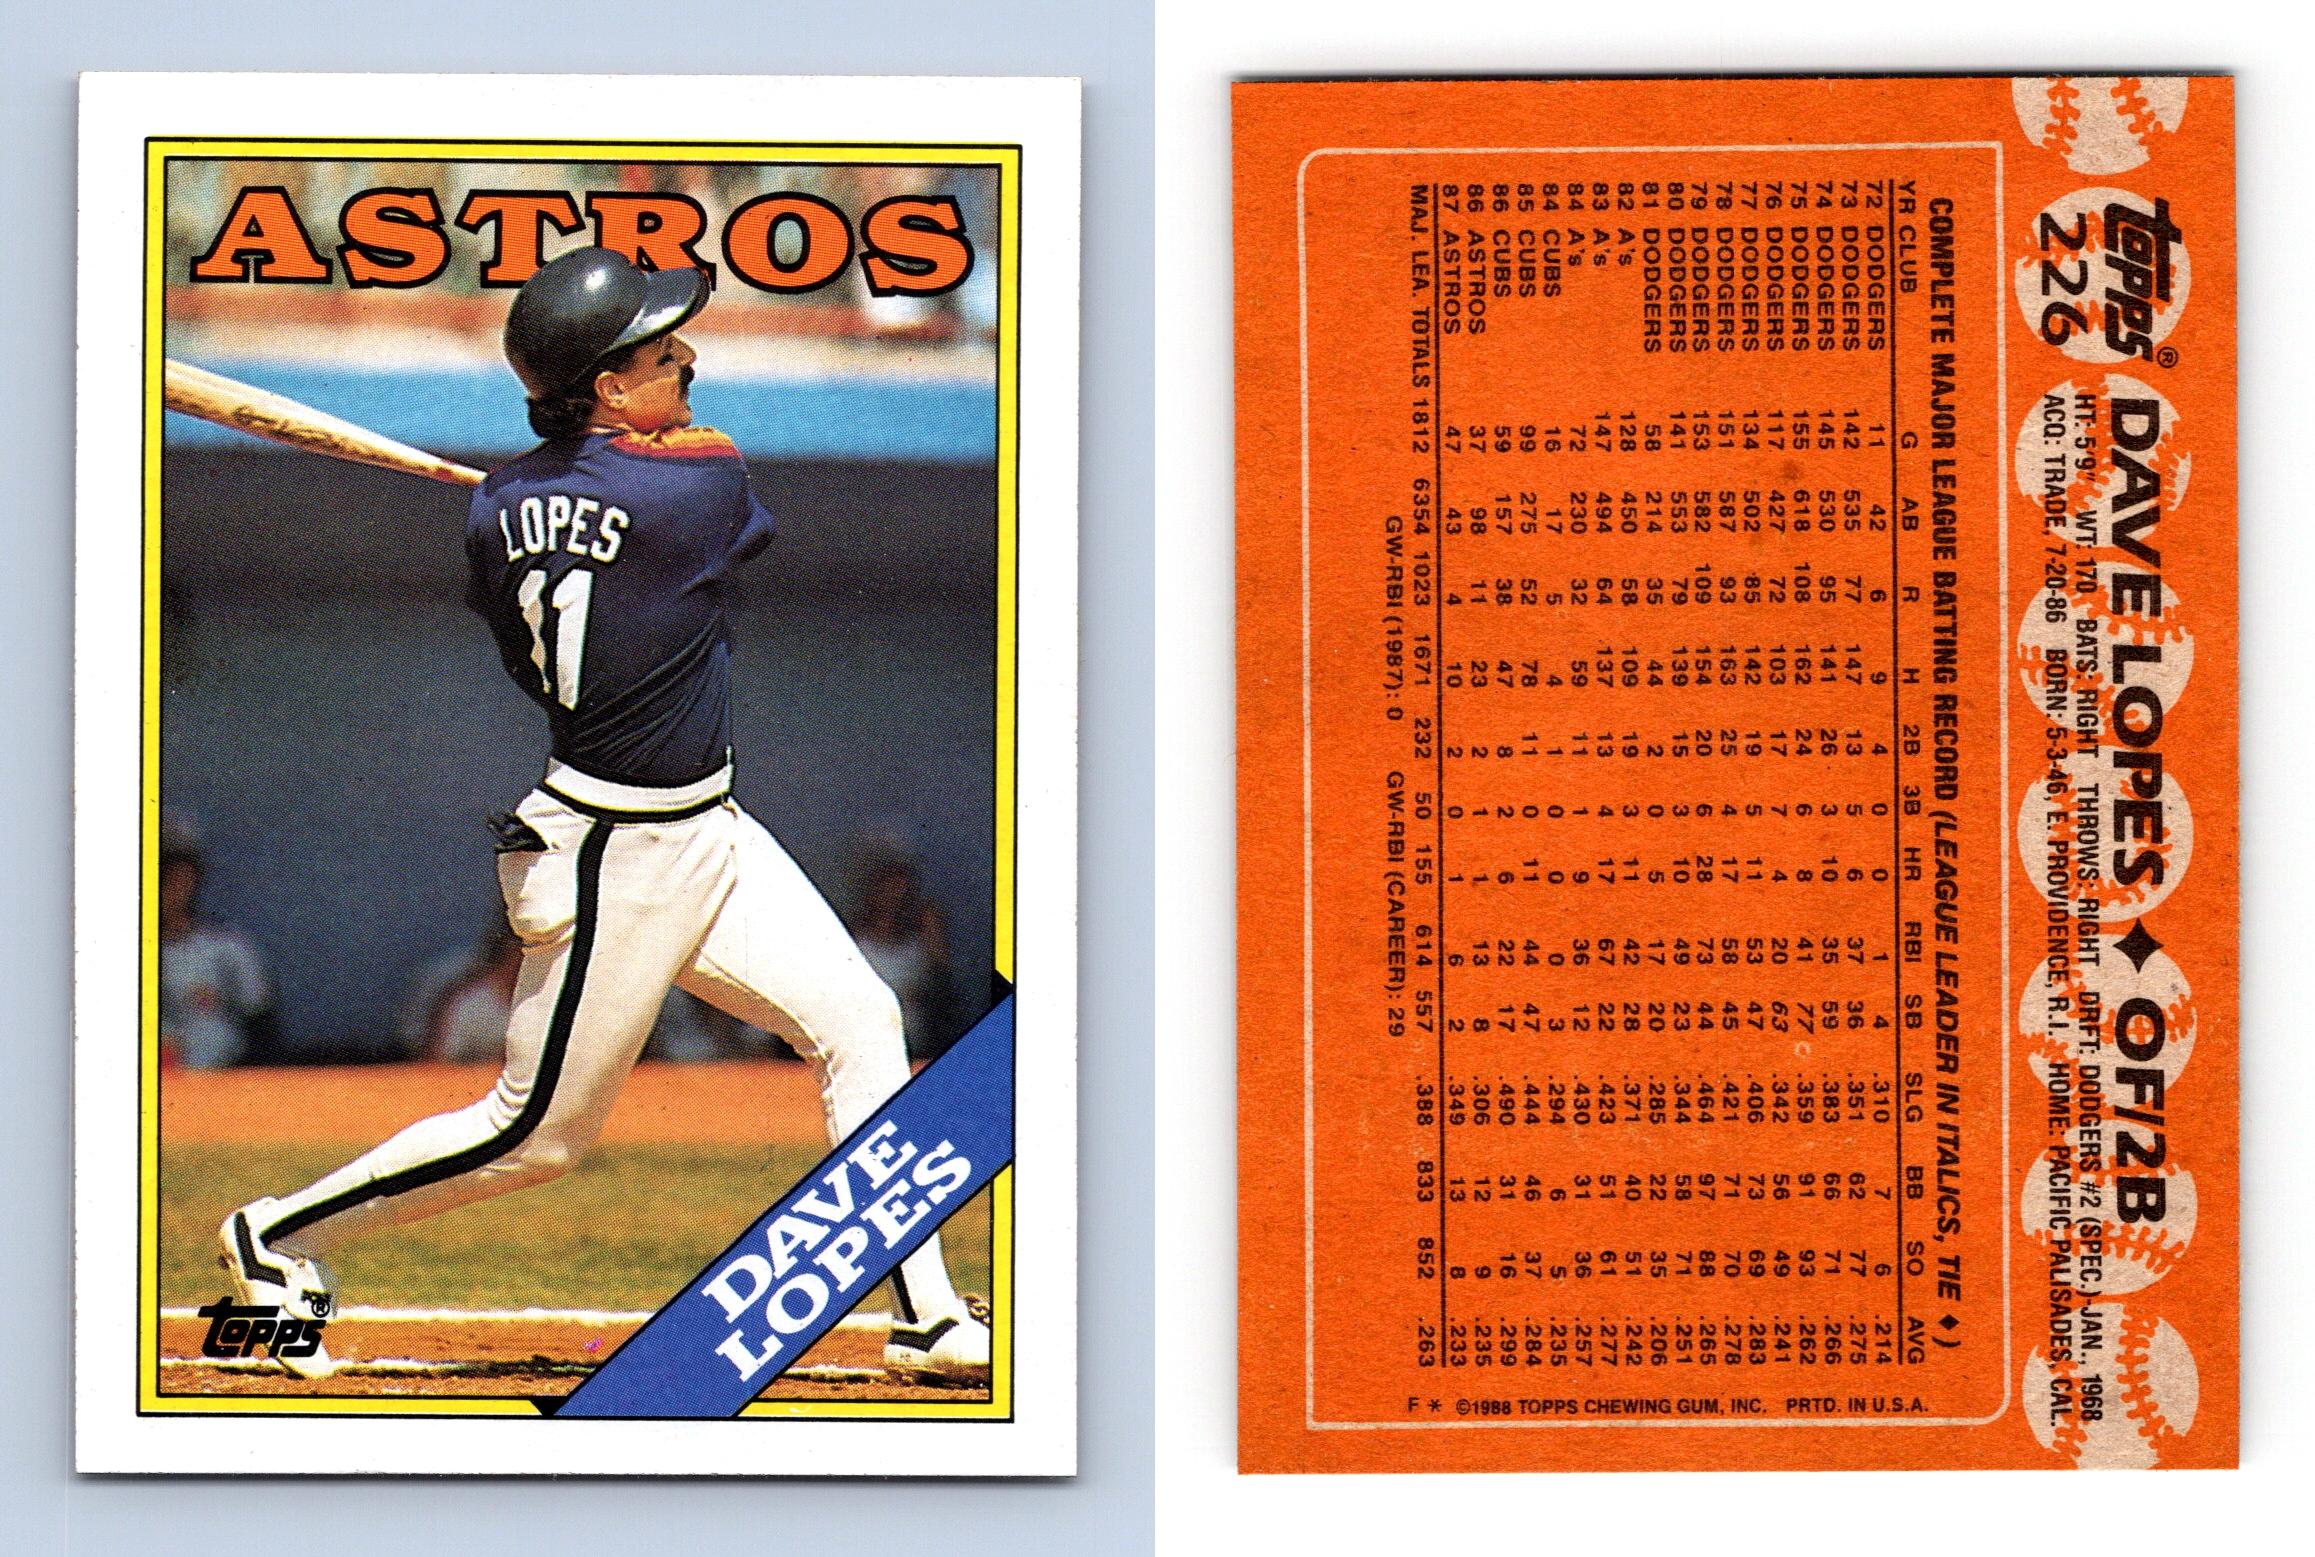 Topps Davey Lopes Baseball Trading Cards